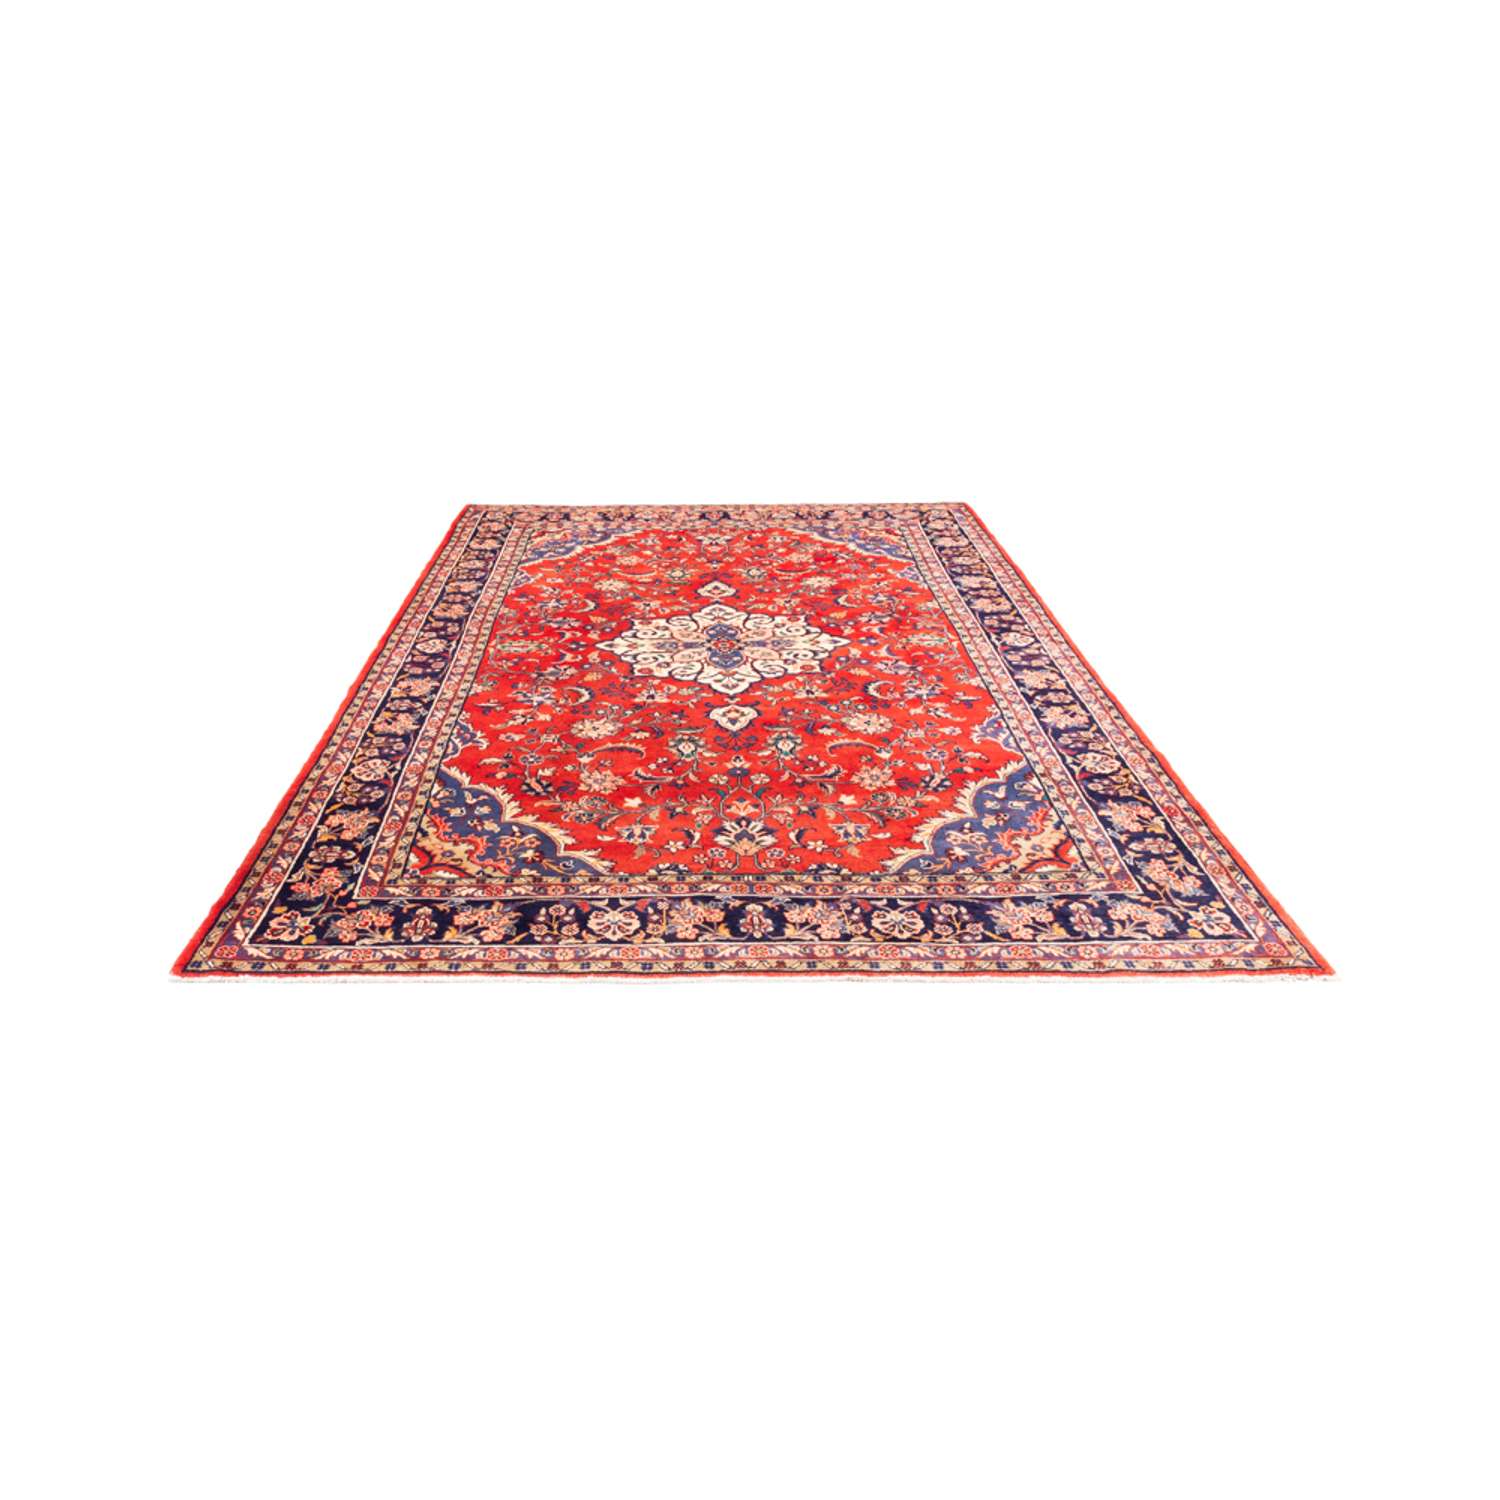 Tapis persan - Classique - 297 x 215 cm - rouge